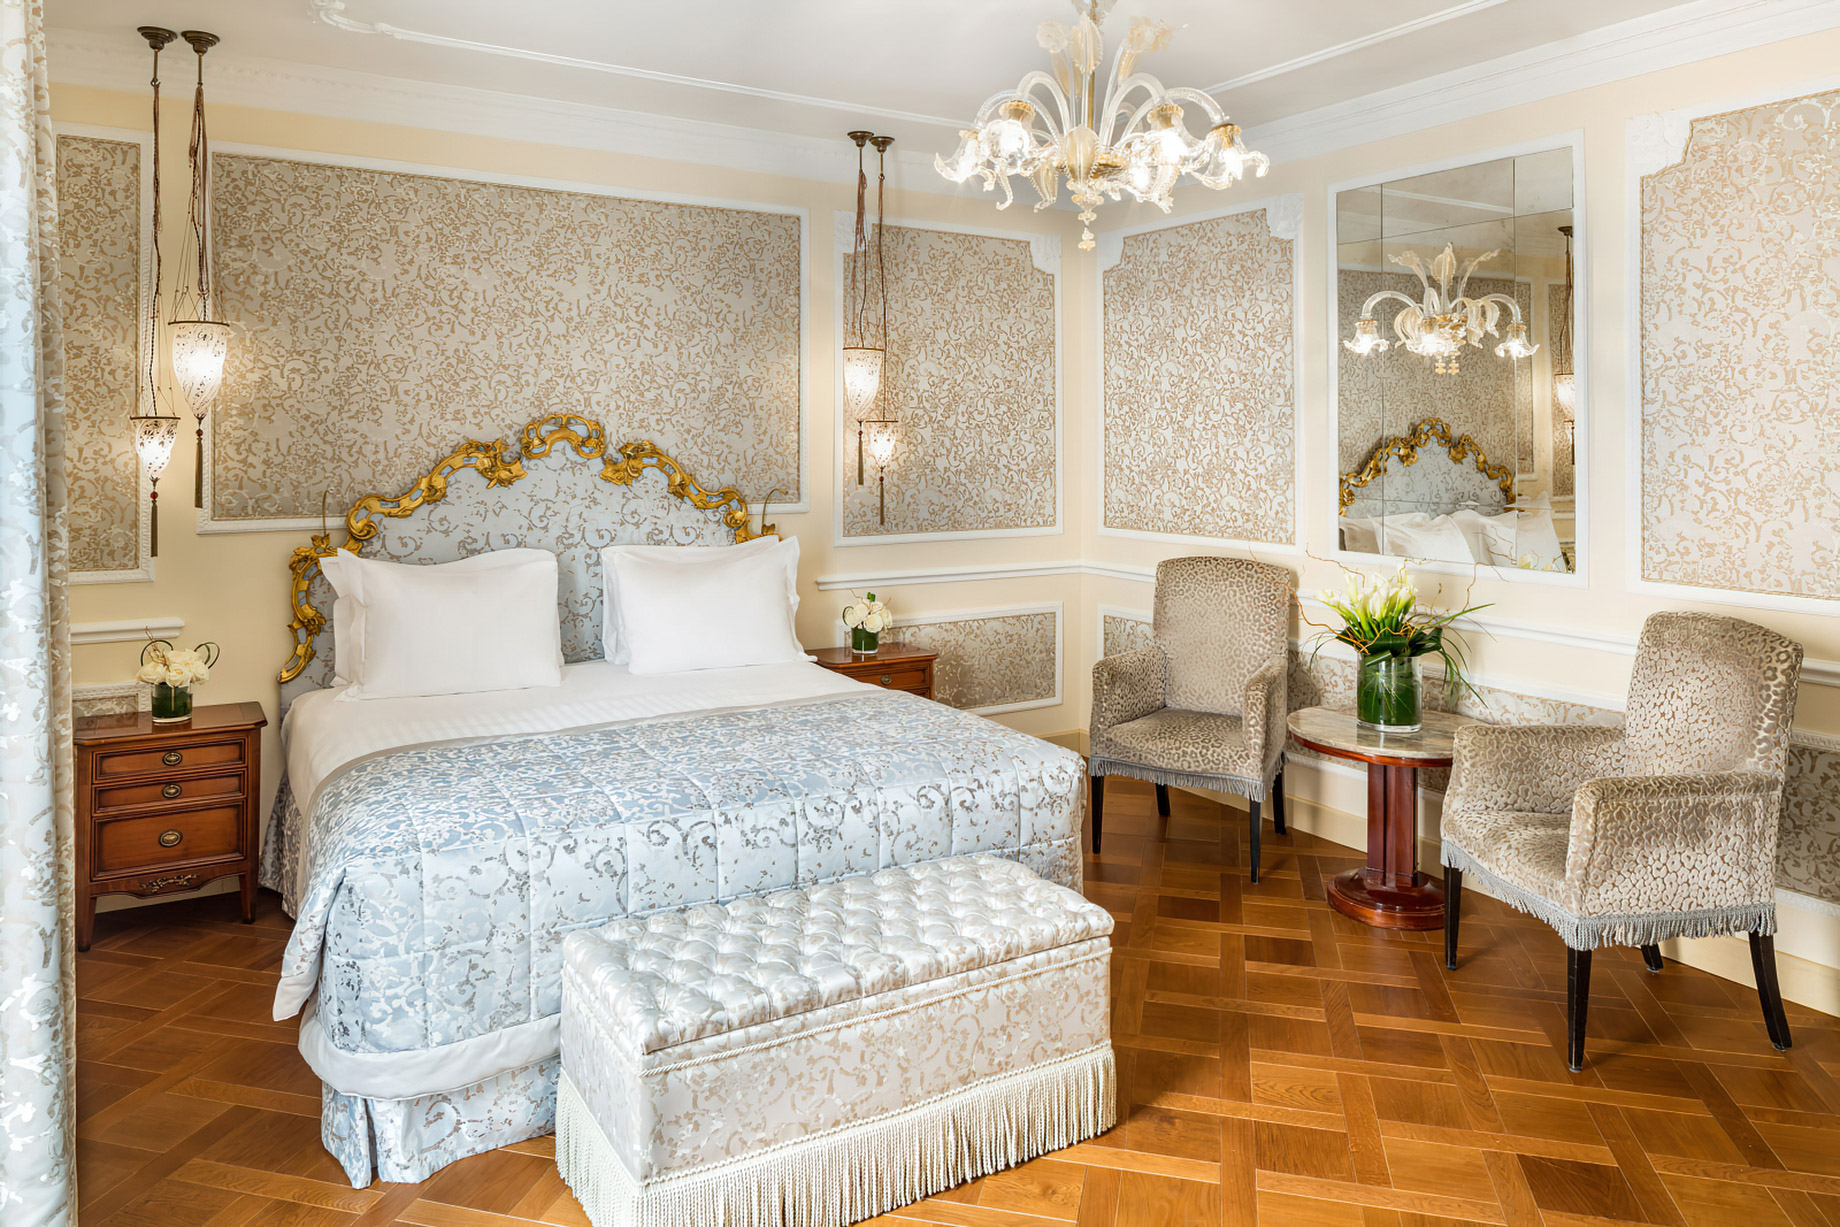 Baglioni Hotel Luna, Venezia - Venice, Italy - 2 Bedroom Family Junior Suite Bedroom